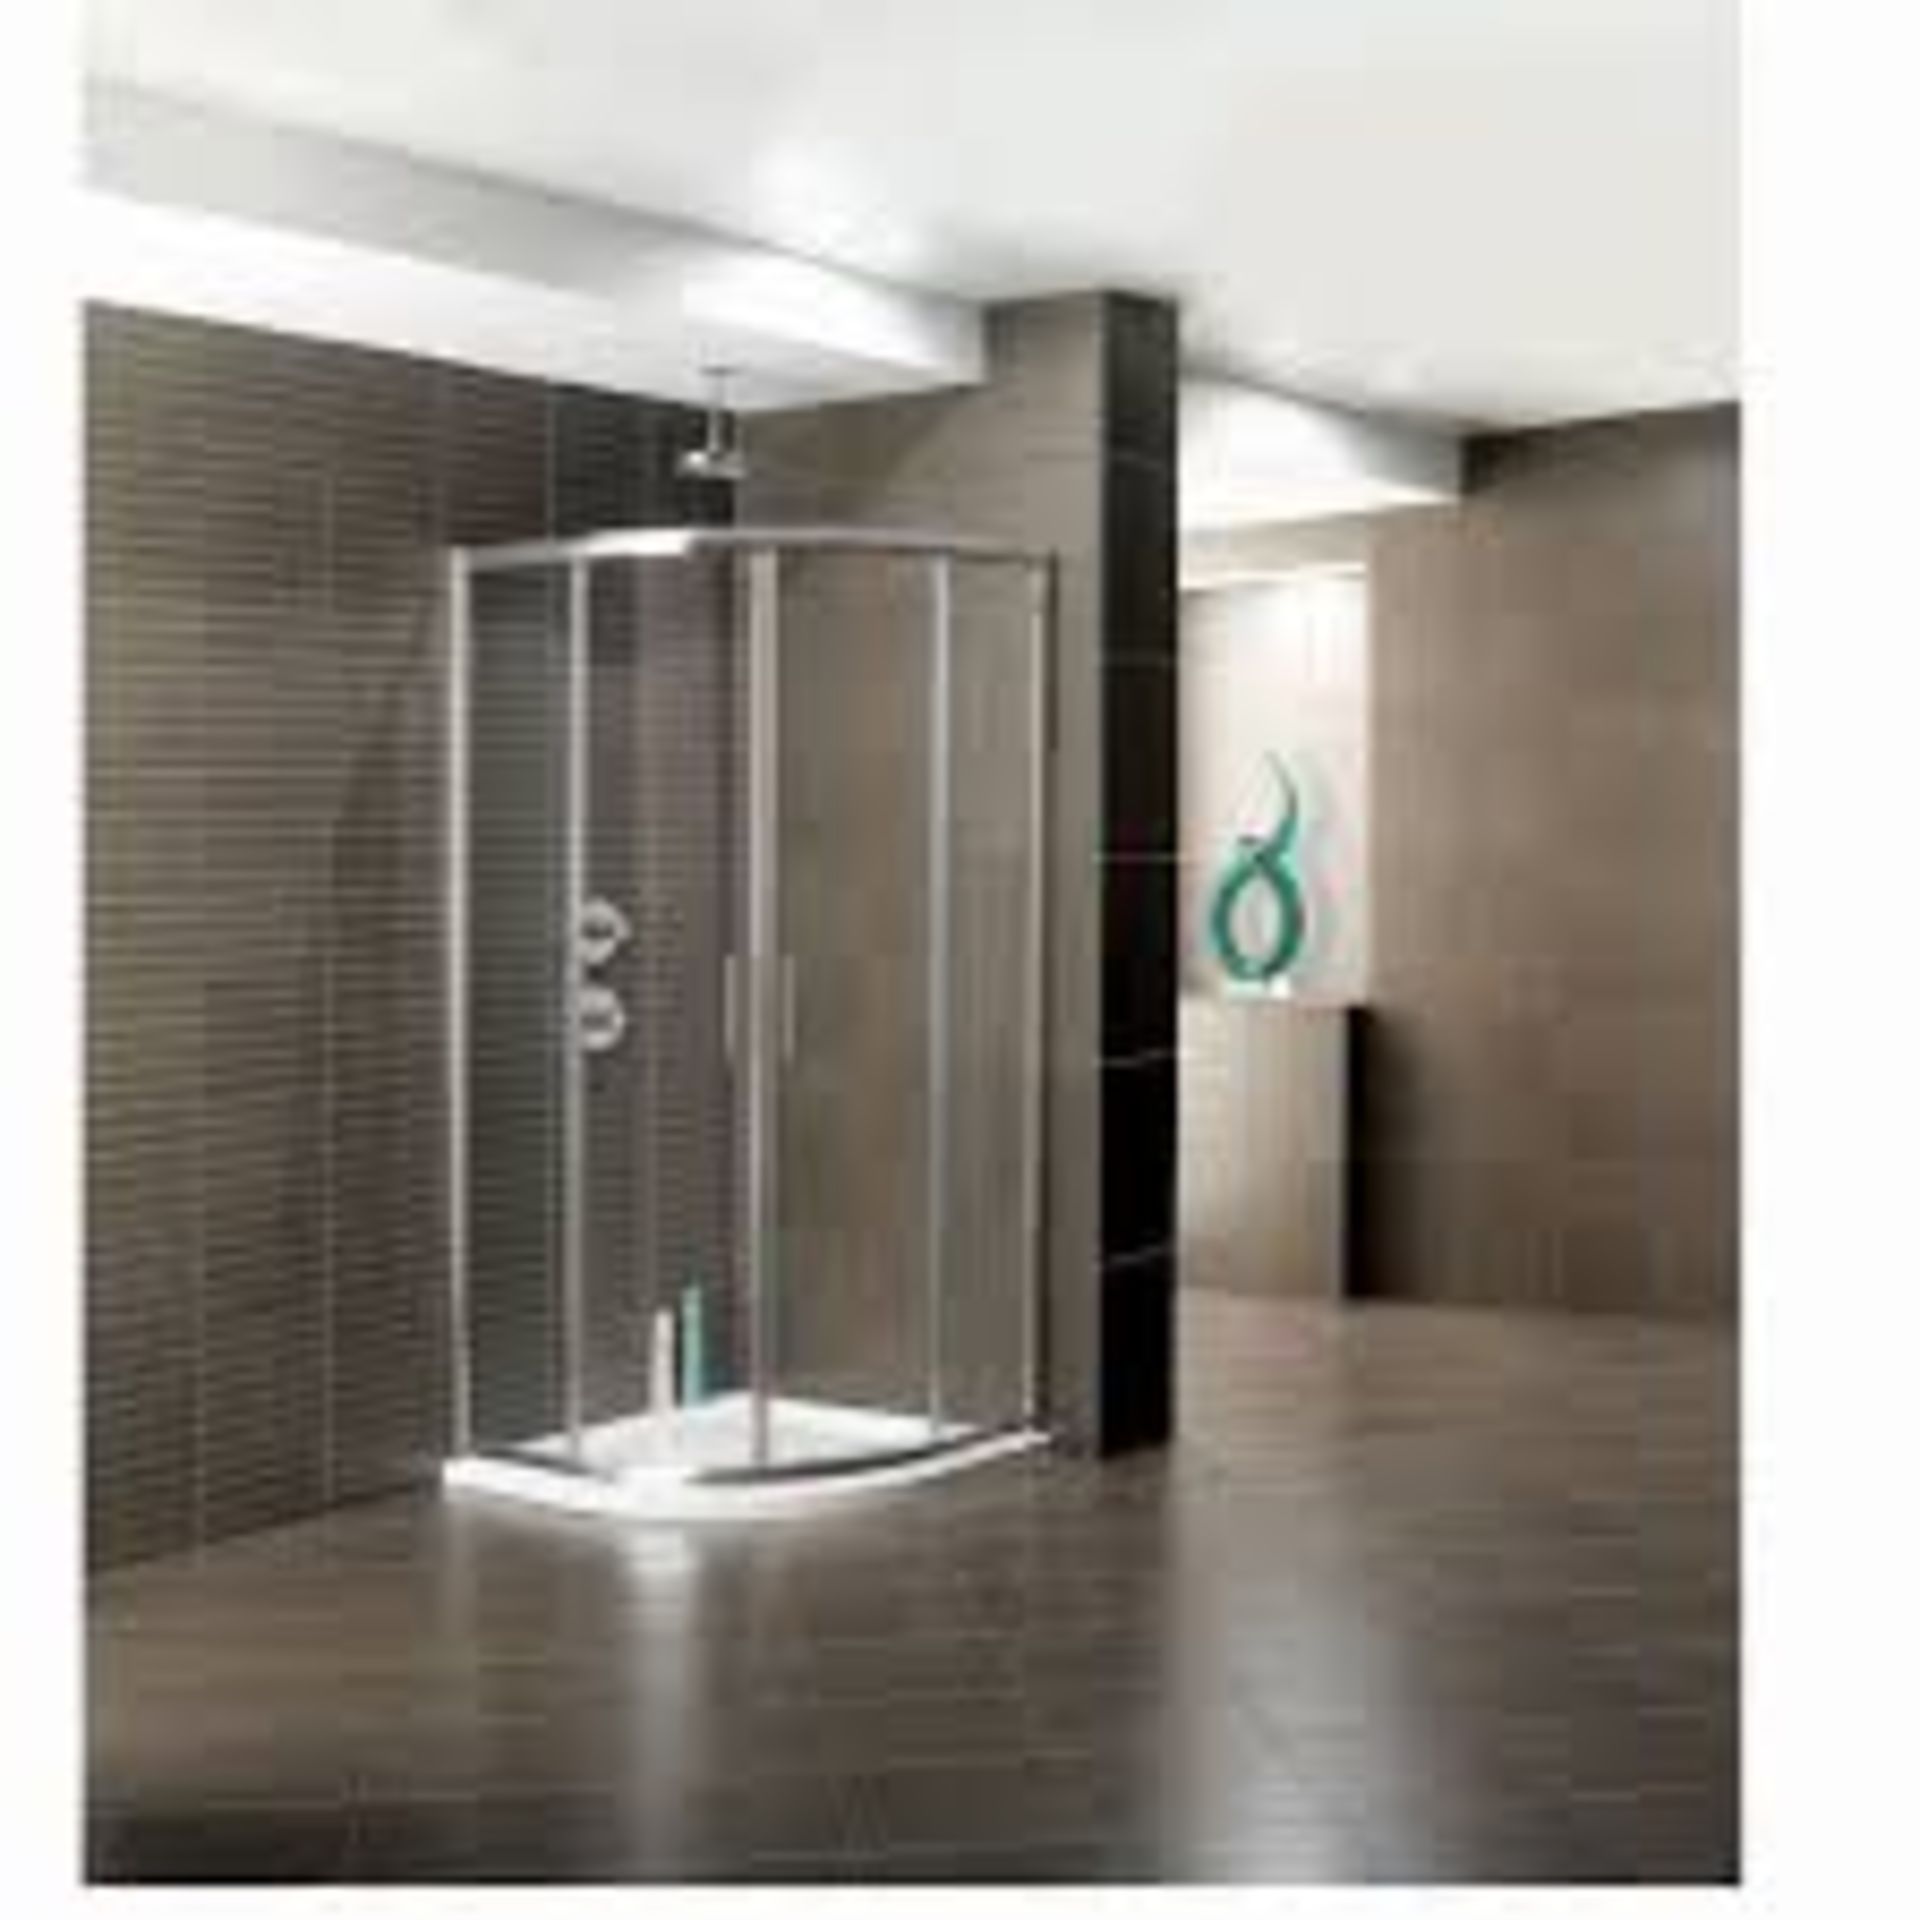 1 x Vogue SULIS Quadrant 800mm Shower Enclosure - Polished Chrome Finish - 6mm Clear Glass - T Bar